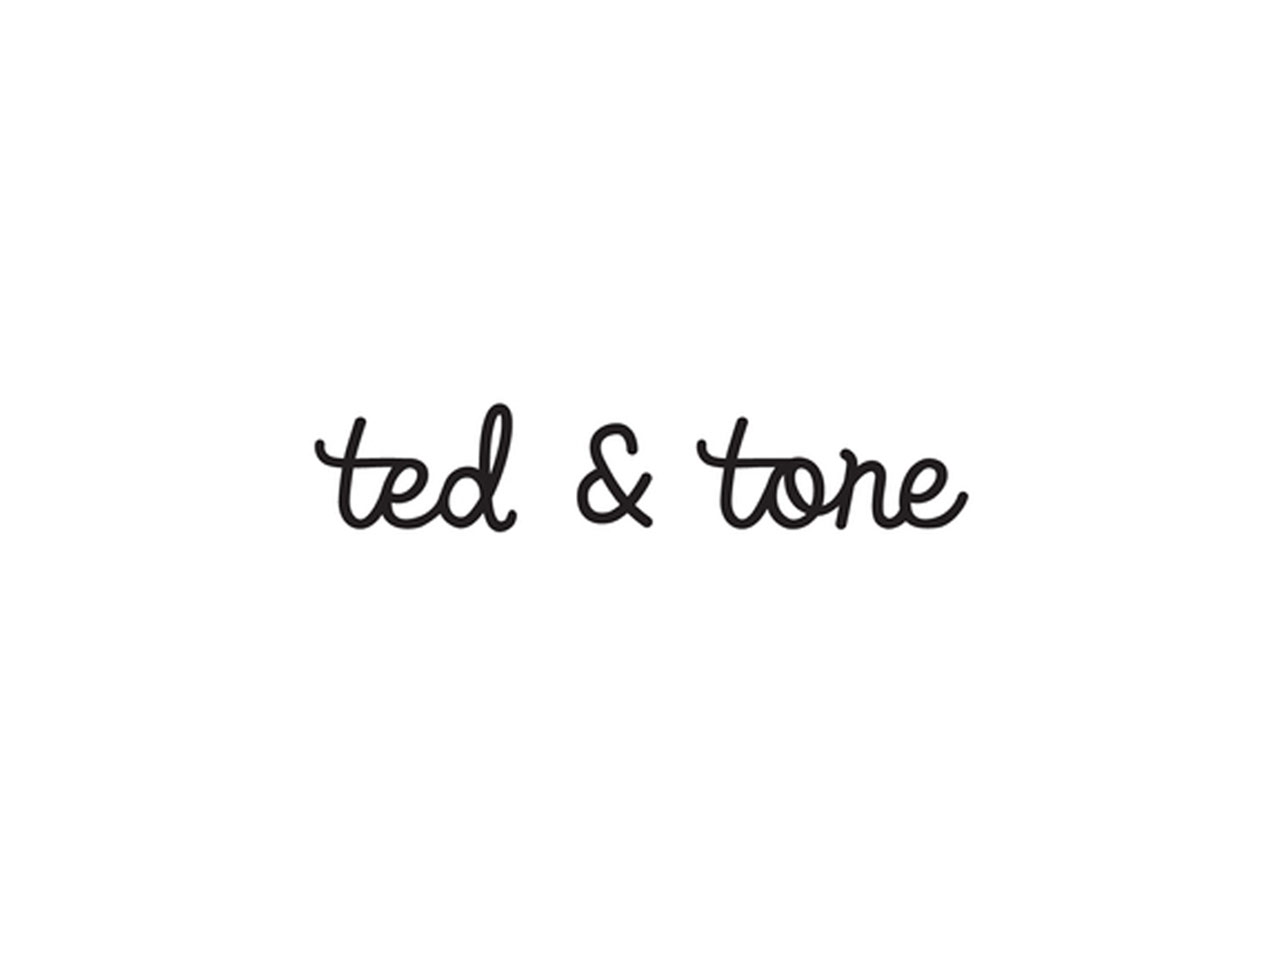 Ted & Tone